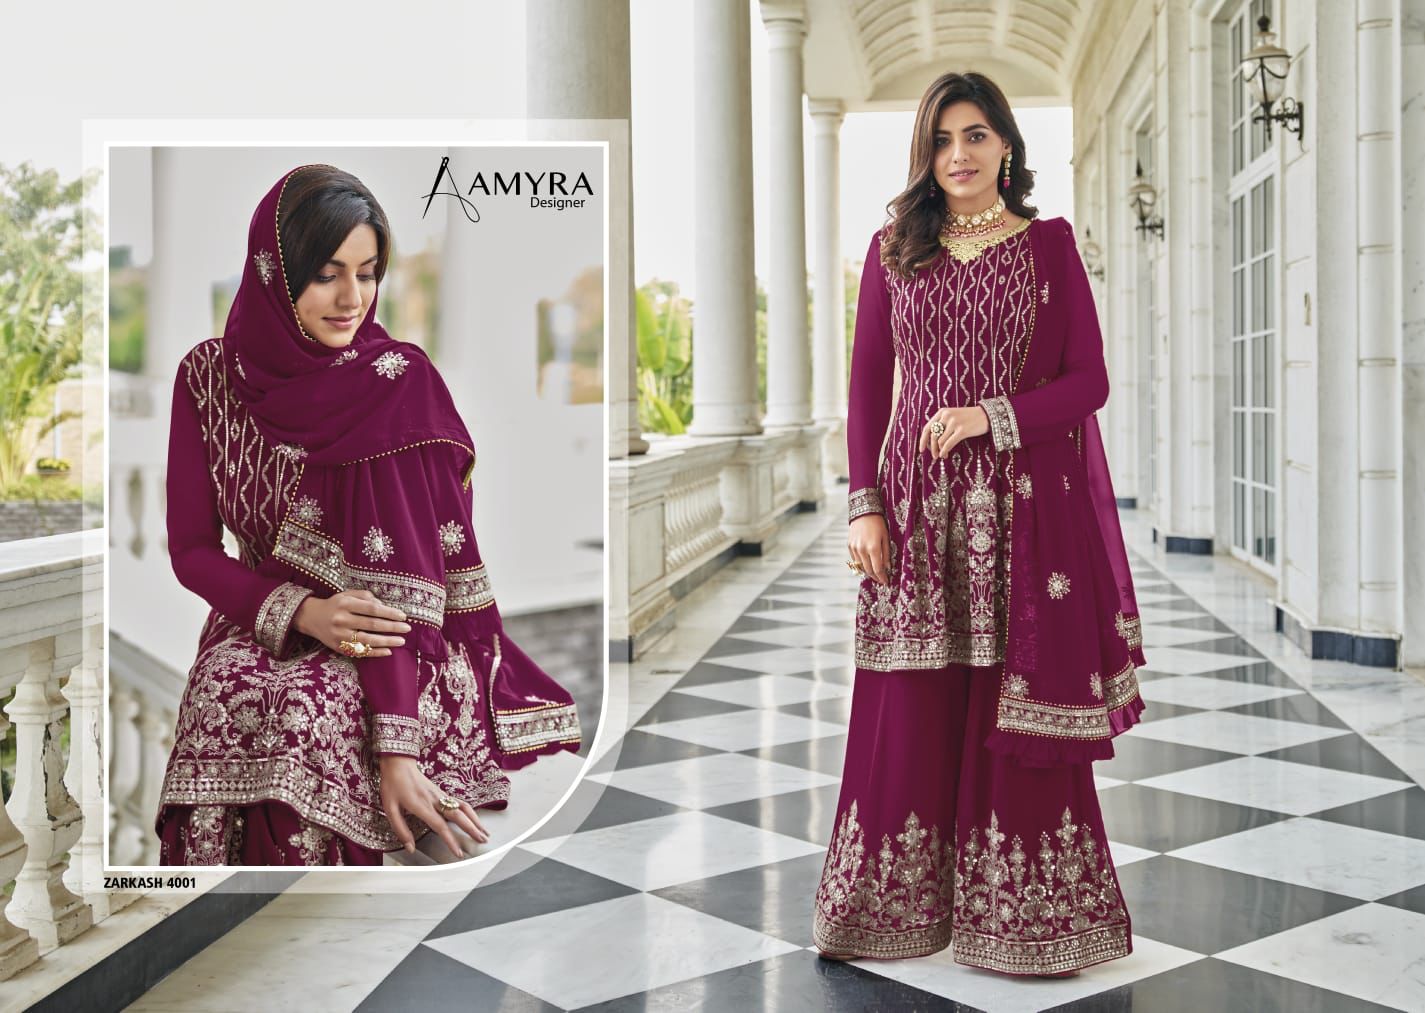 Aamyra Designer Zarkash 4001